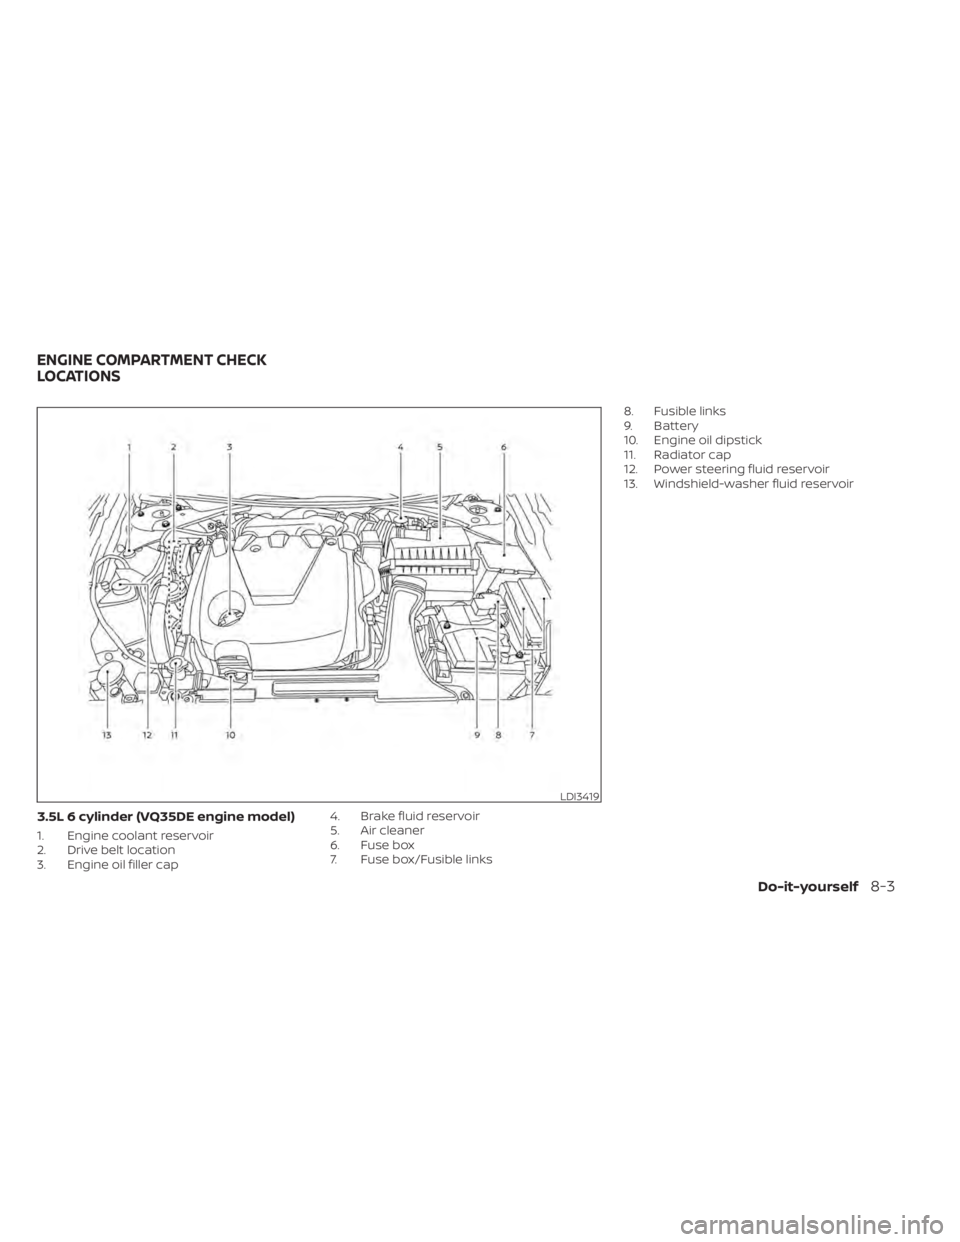 NISSAN MAXIMA 2021  Owner´s Manual 3.5L 6 cylinder (VQ35DE engine model)
1. Engine coolant reservoir
2. Drive belt location
3. Engine oil filler cap4. Brake fluid reservoir
5. Air cleaner
6. Fuse box
7. Fuse box/Fusible links8. Fusible